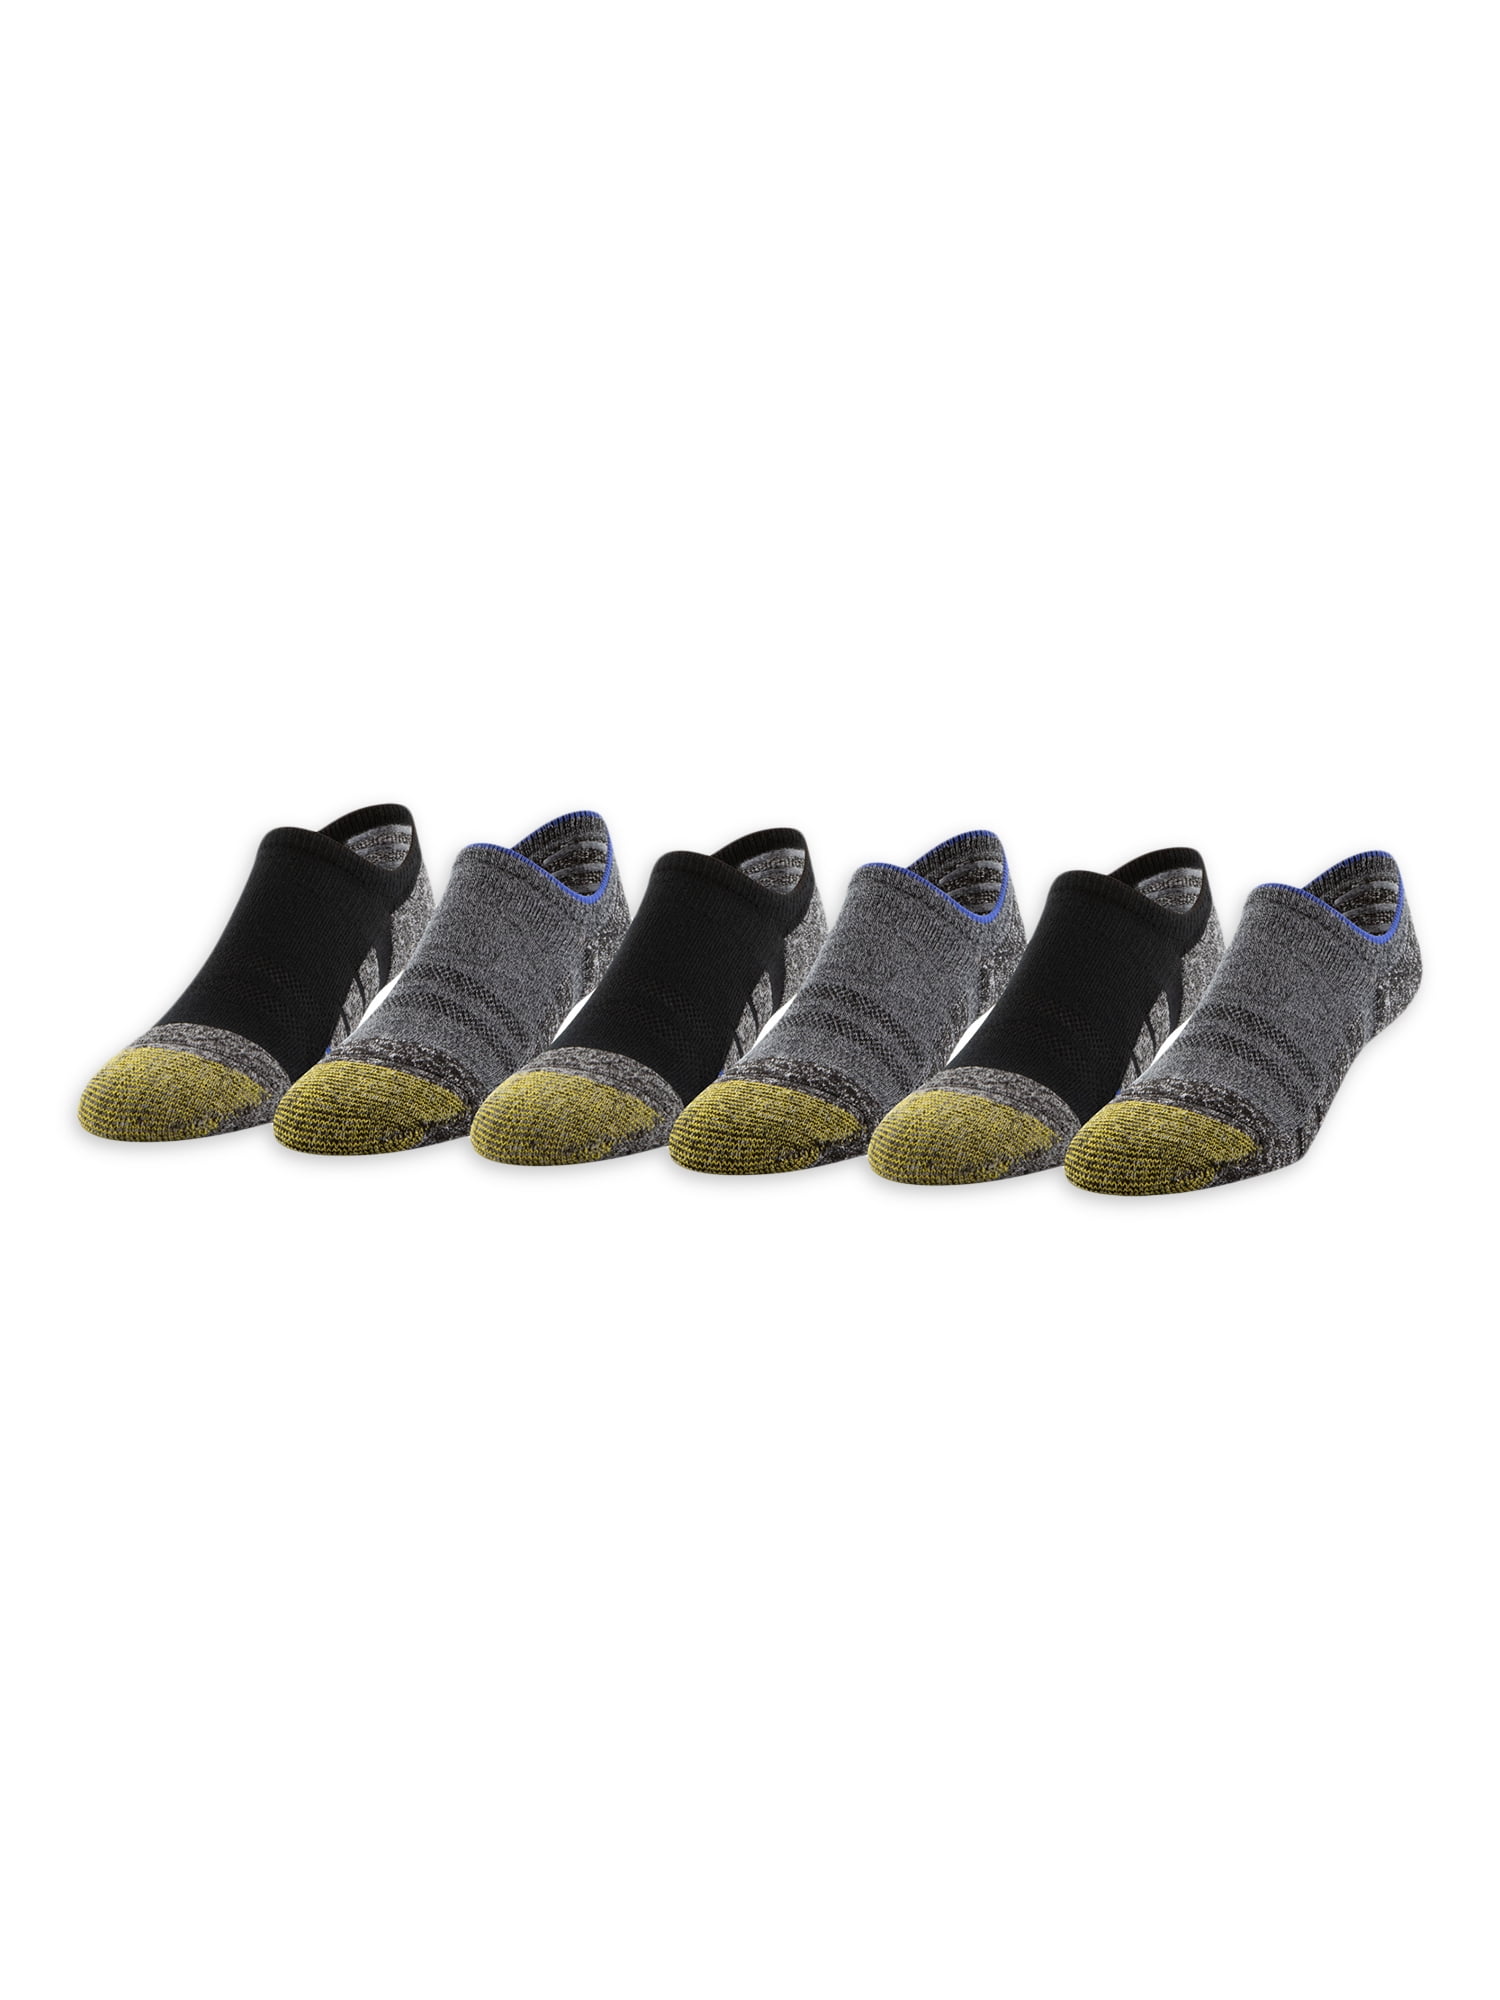 GOLDTOE Edition Men's ProSport Cushion Max Sneaker Socks, 6-Pack